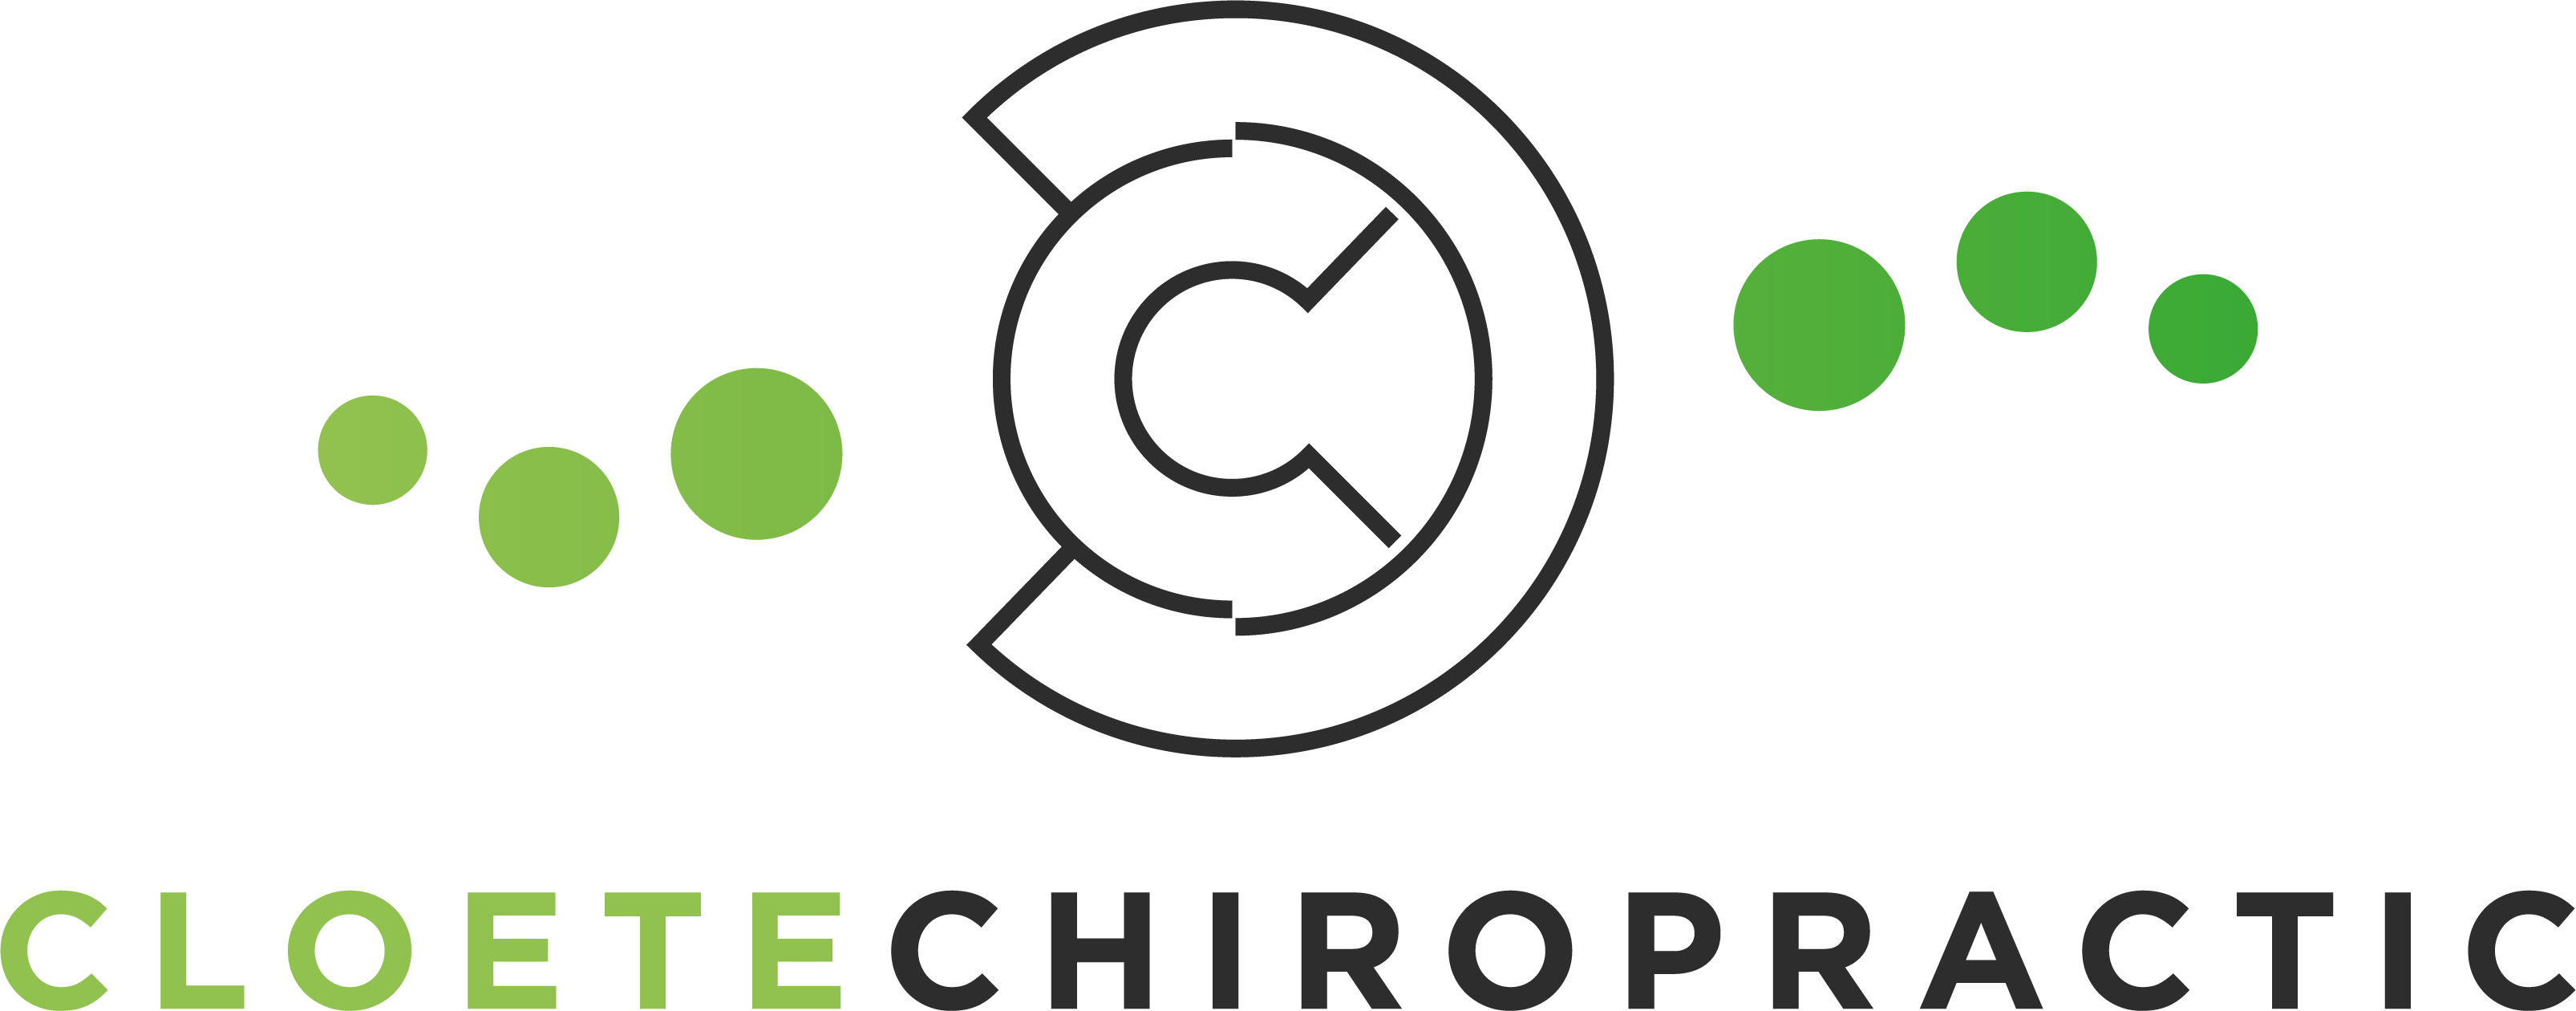 Cloete Chiropractic small logo